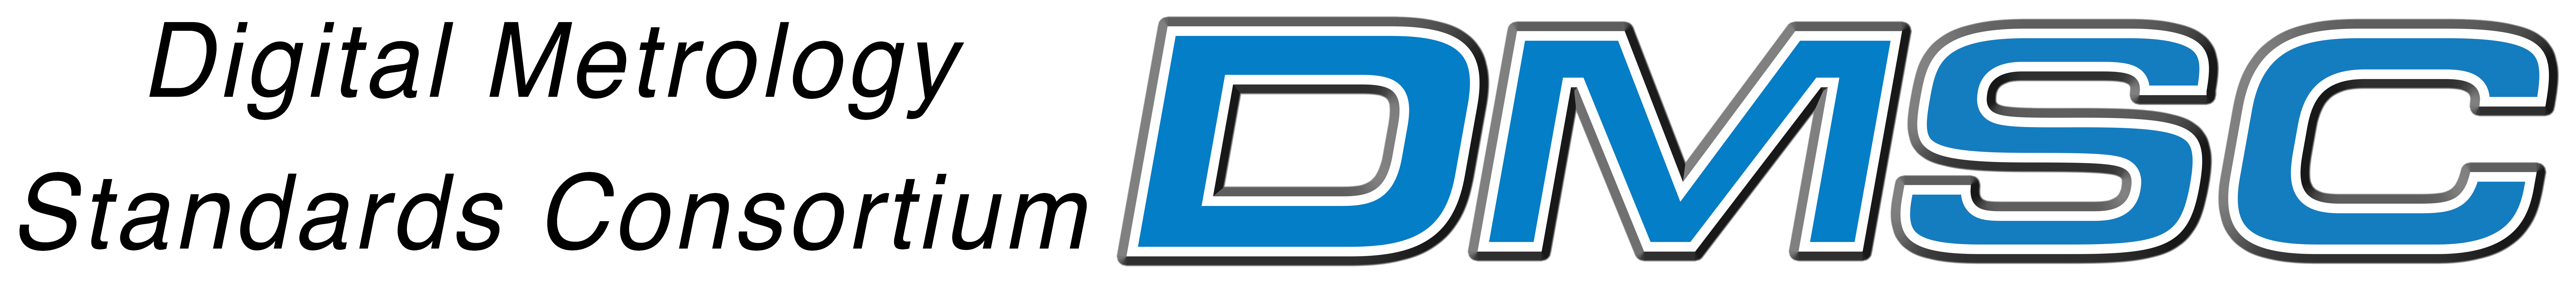 Digital Metrology Standards Consortium DMSC logo 2021